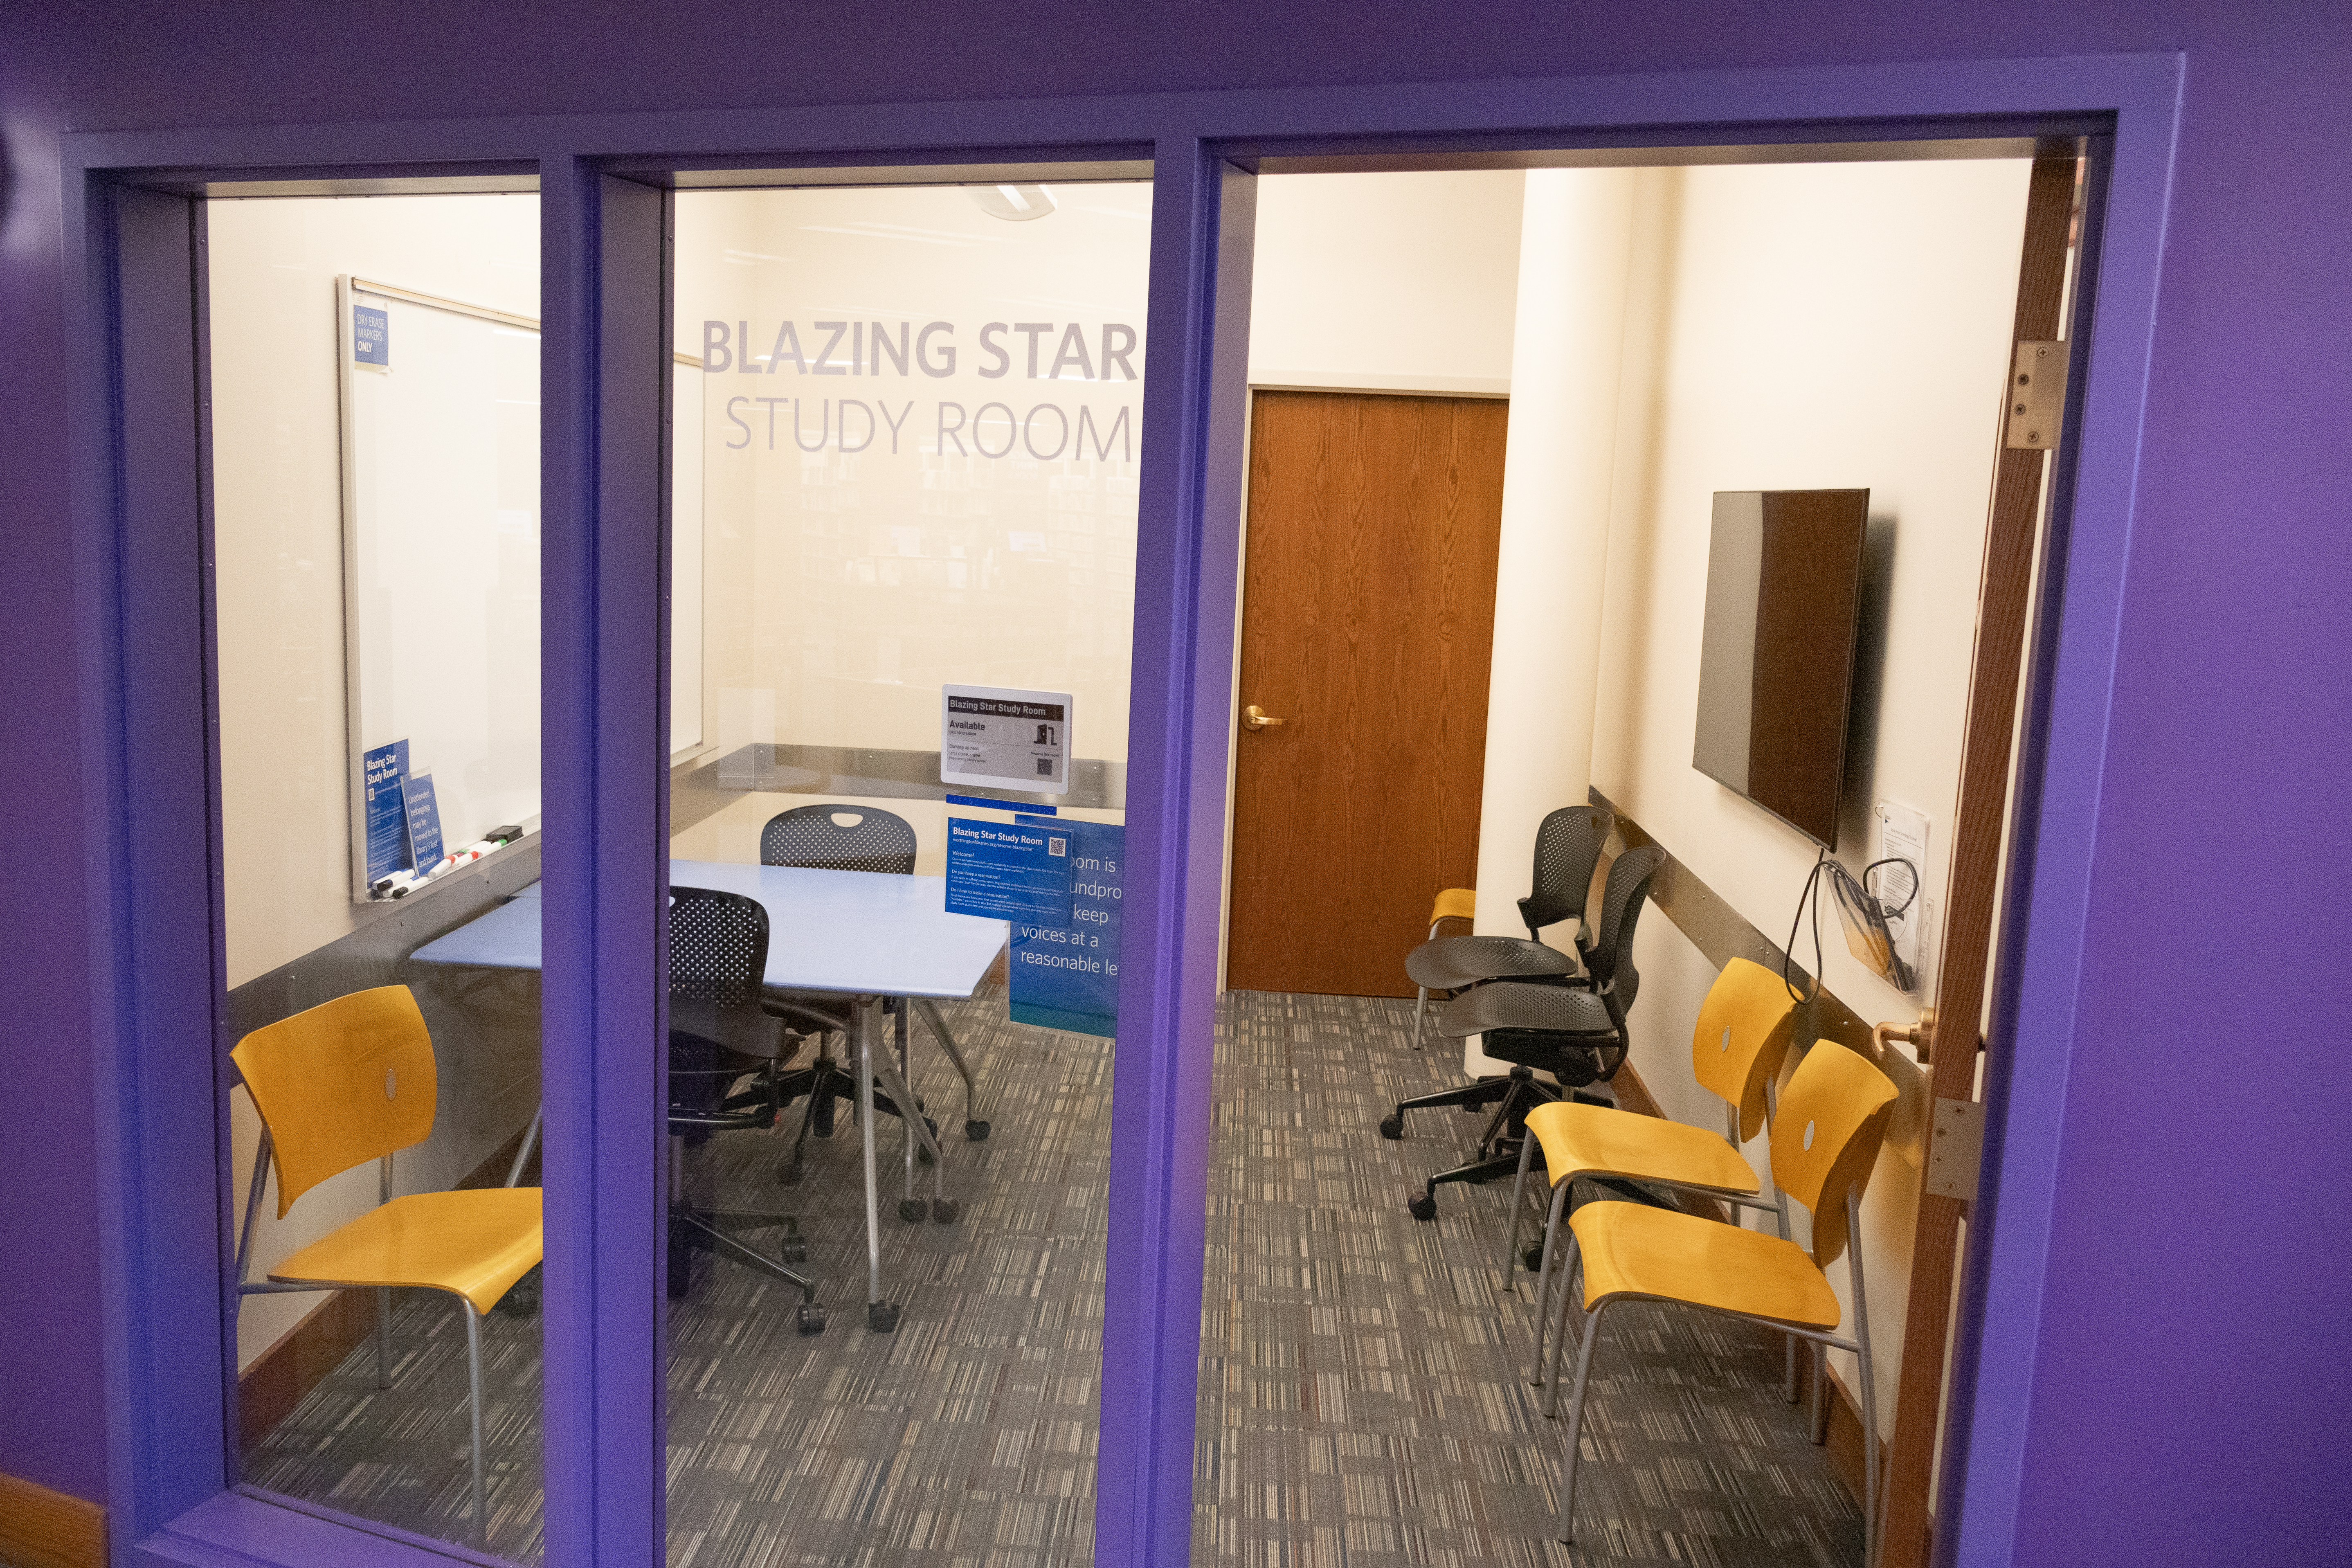 Blazing Star Study Room seen through the doorway and windows